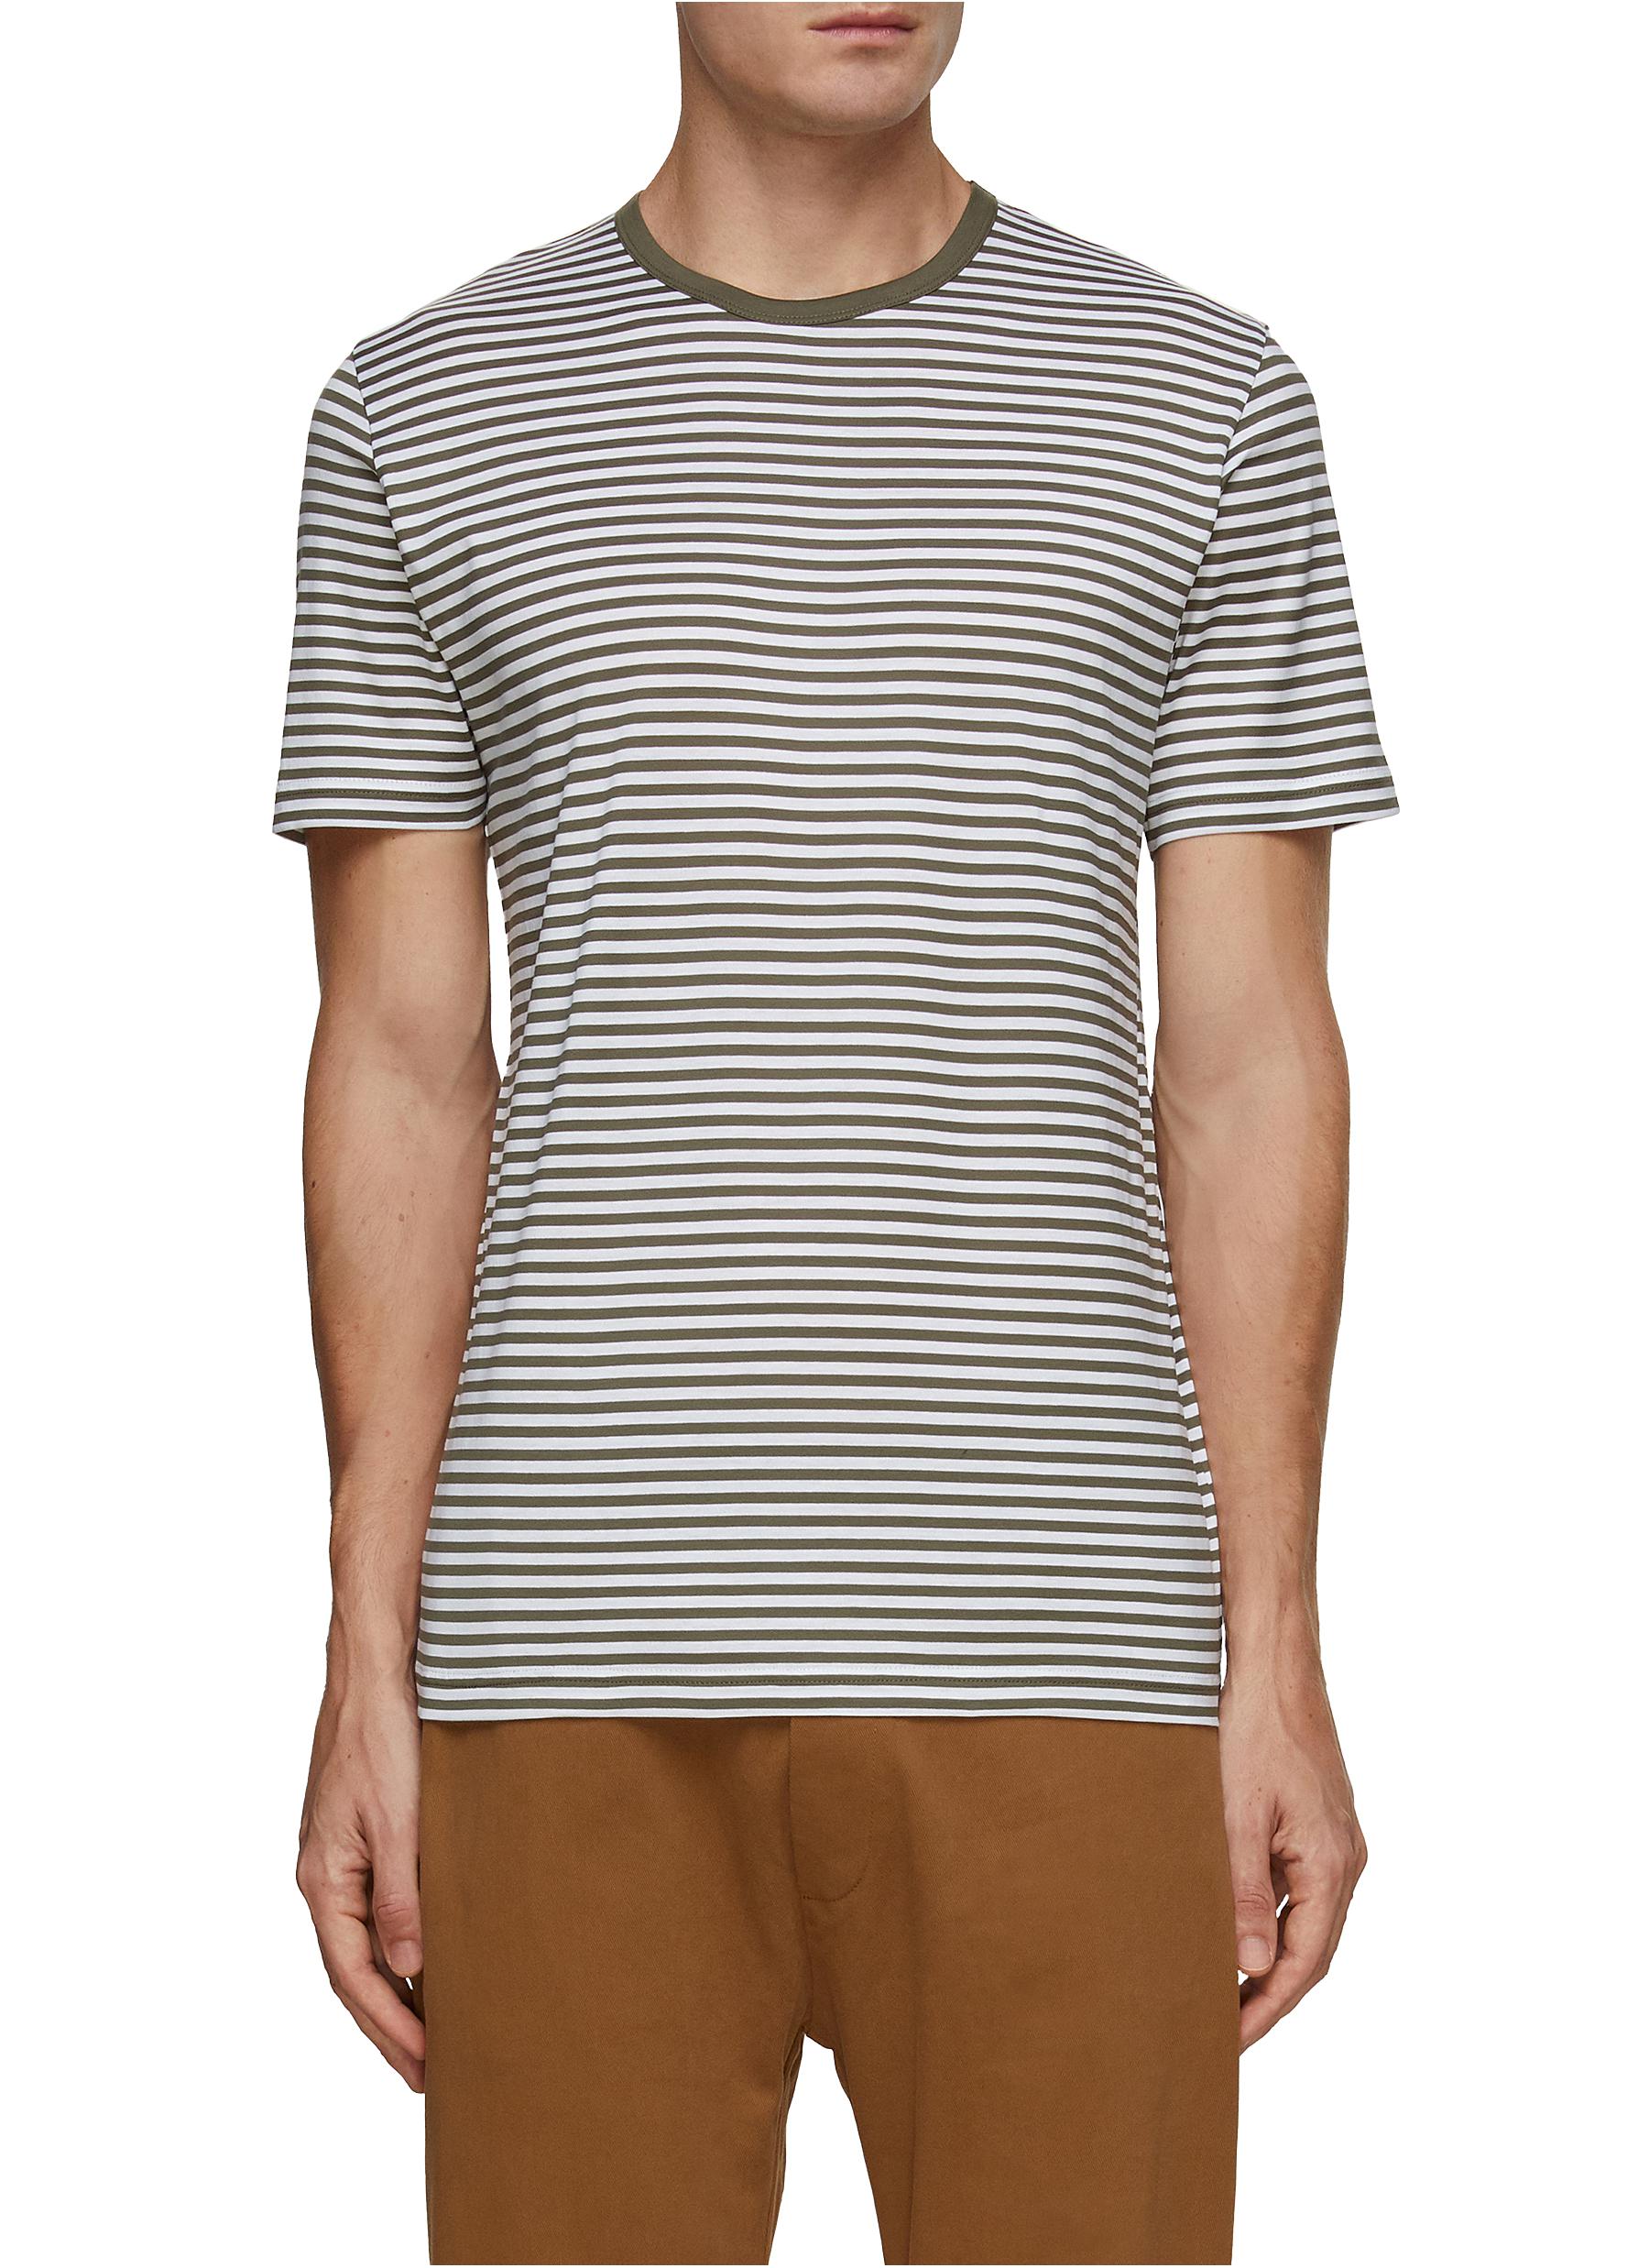 Striped Supima Cotton T-Shirt